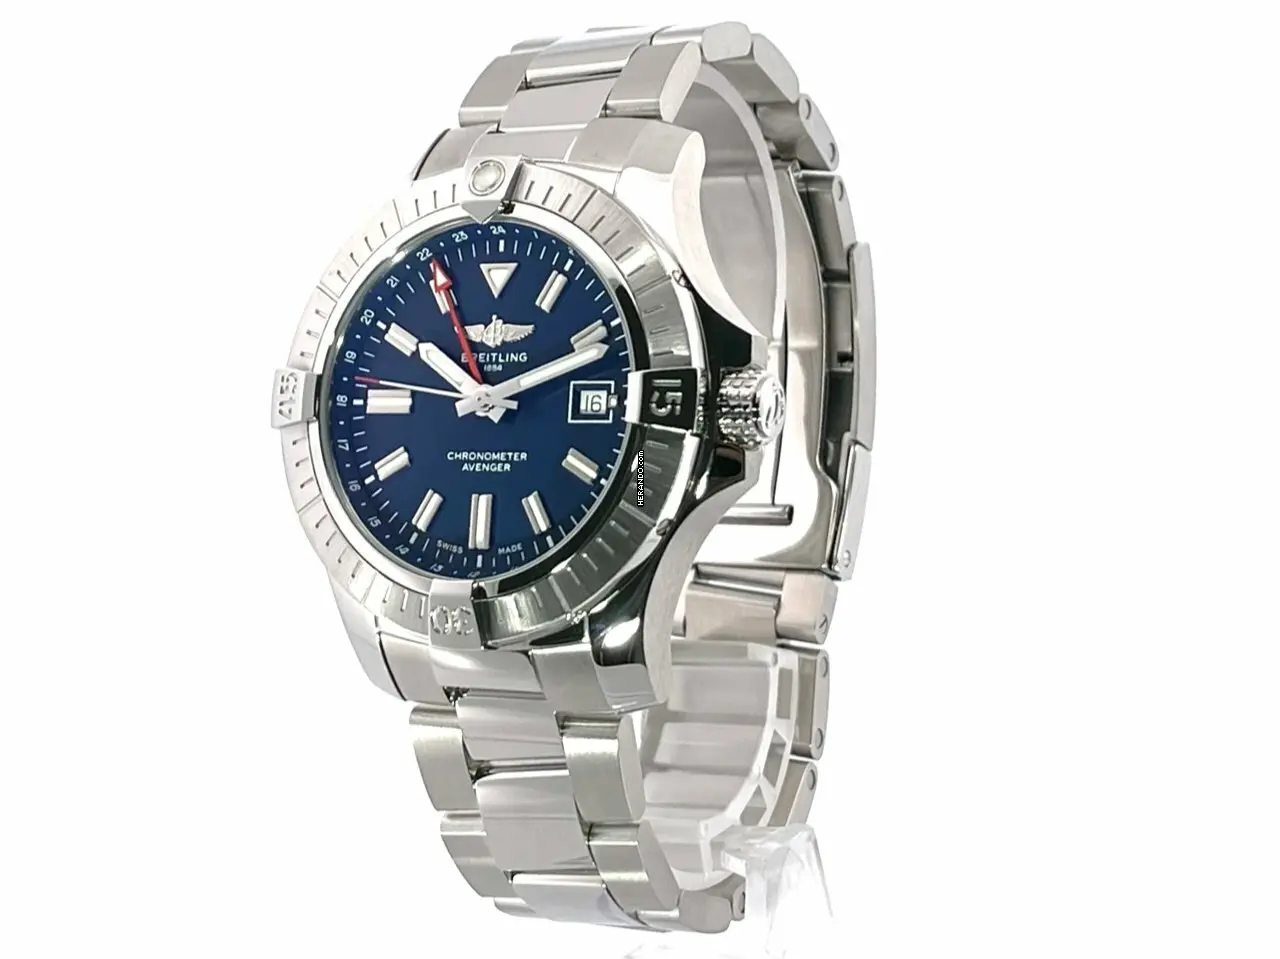 watches-243982-19110932-xveqt42h6lkprnaz6i49n7kg-ExtraLarge.webp